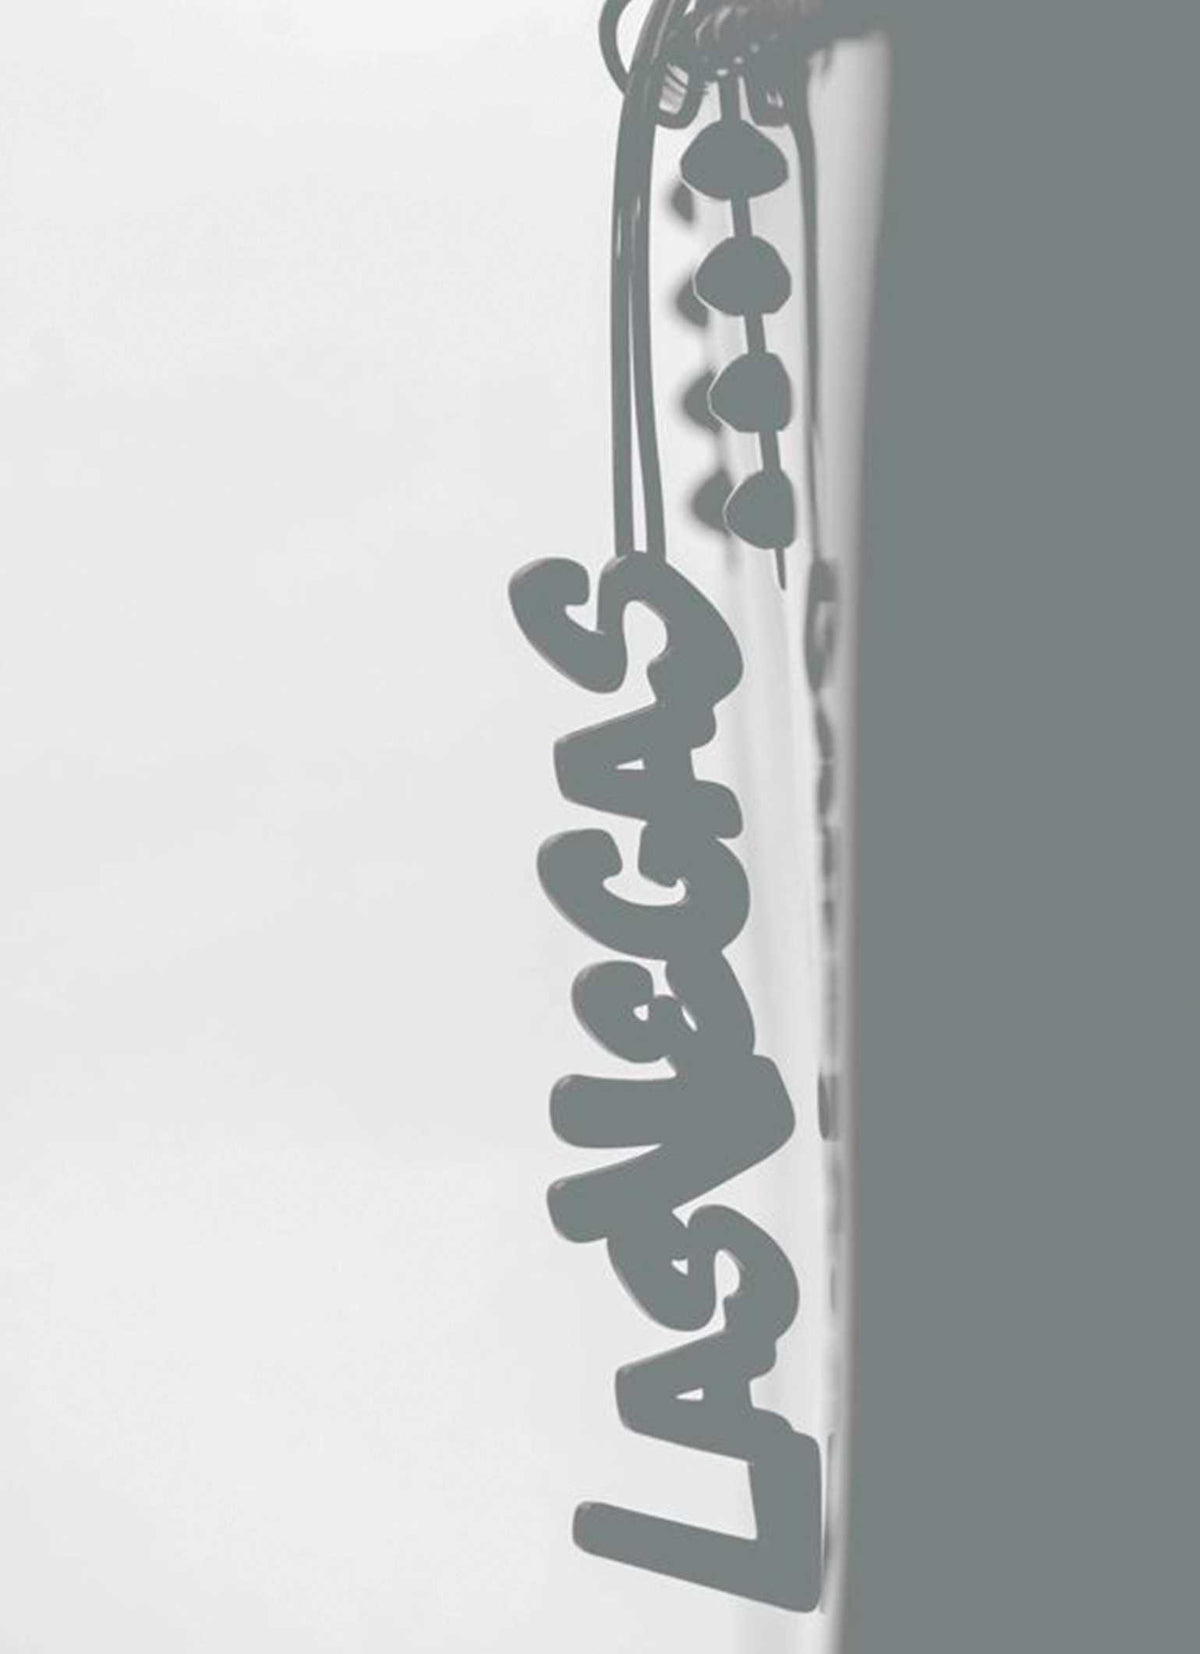 Waterproof Carmen Sol Las Vegas jelly bag charms in color white 